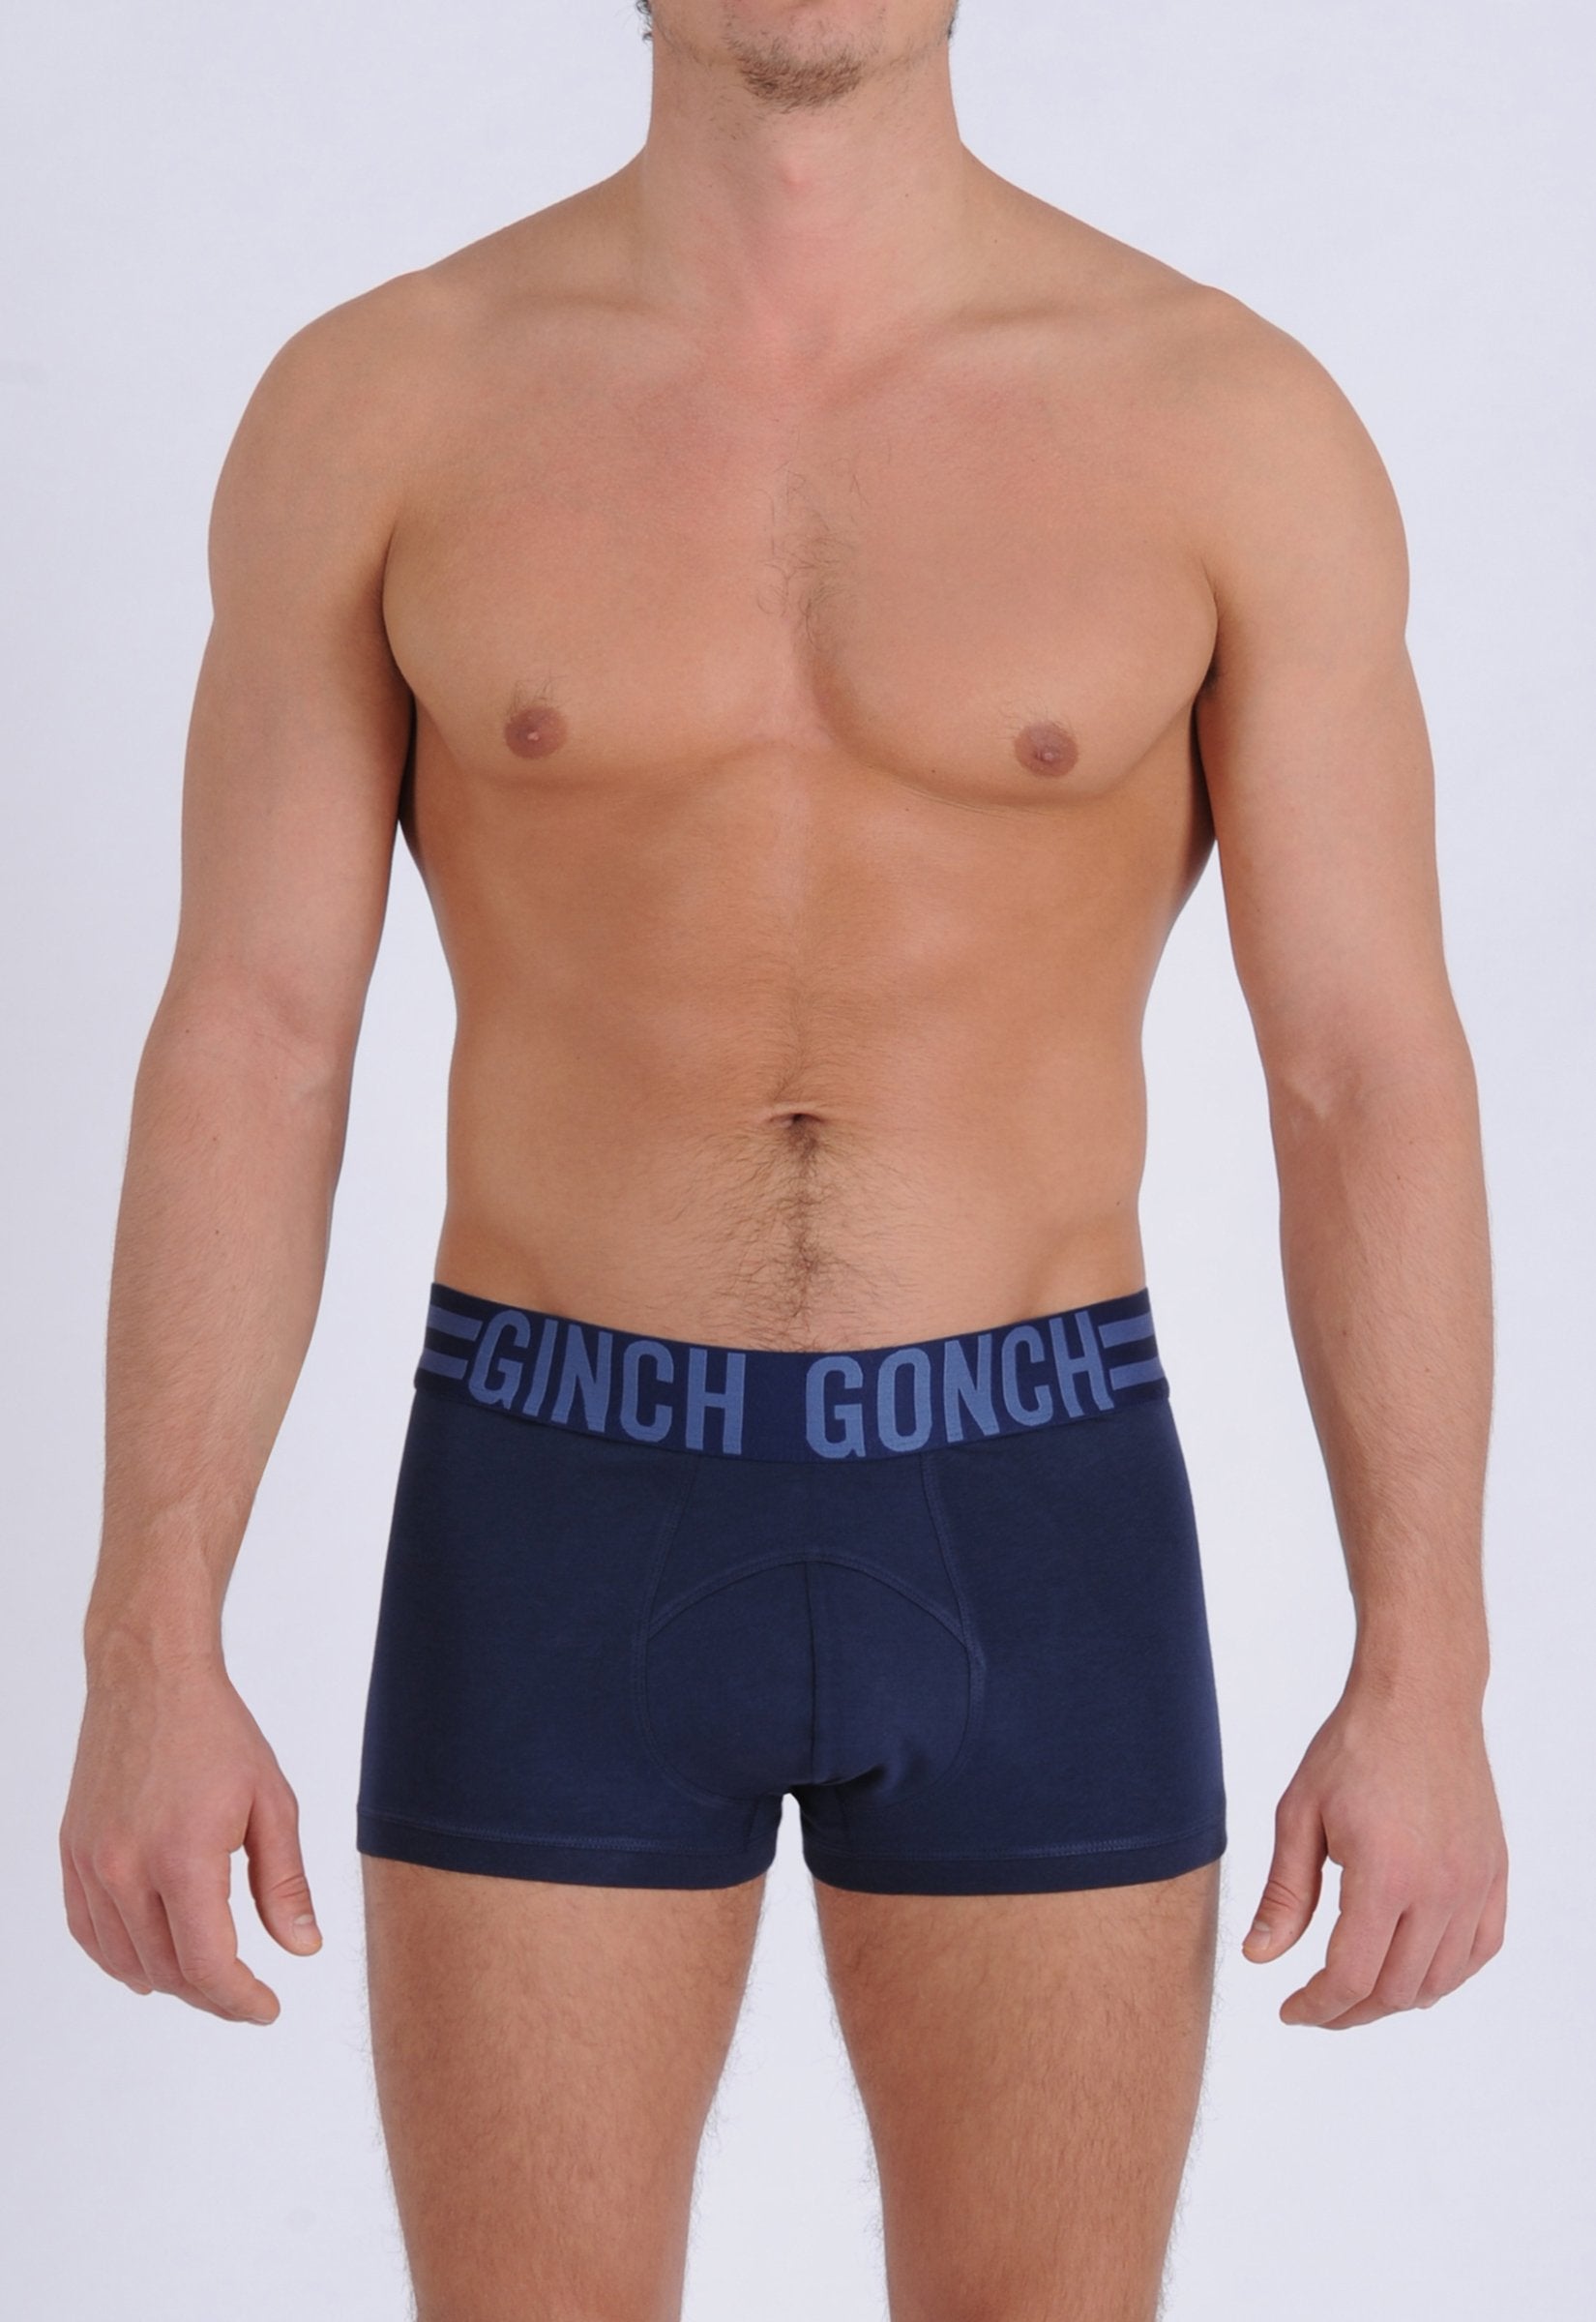 Ginch Gonch Signature Series - Trunk, short boxer brief - Navy men's underwear thick printed waistband front